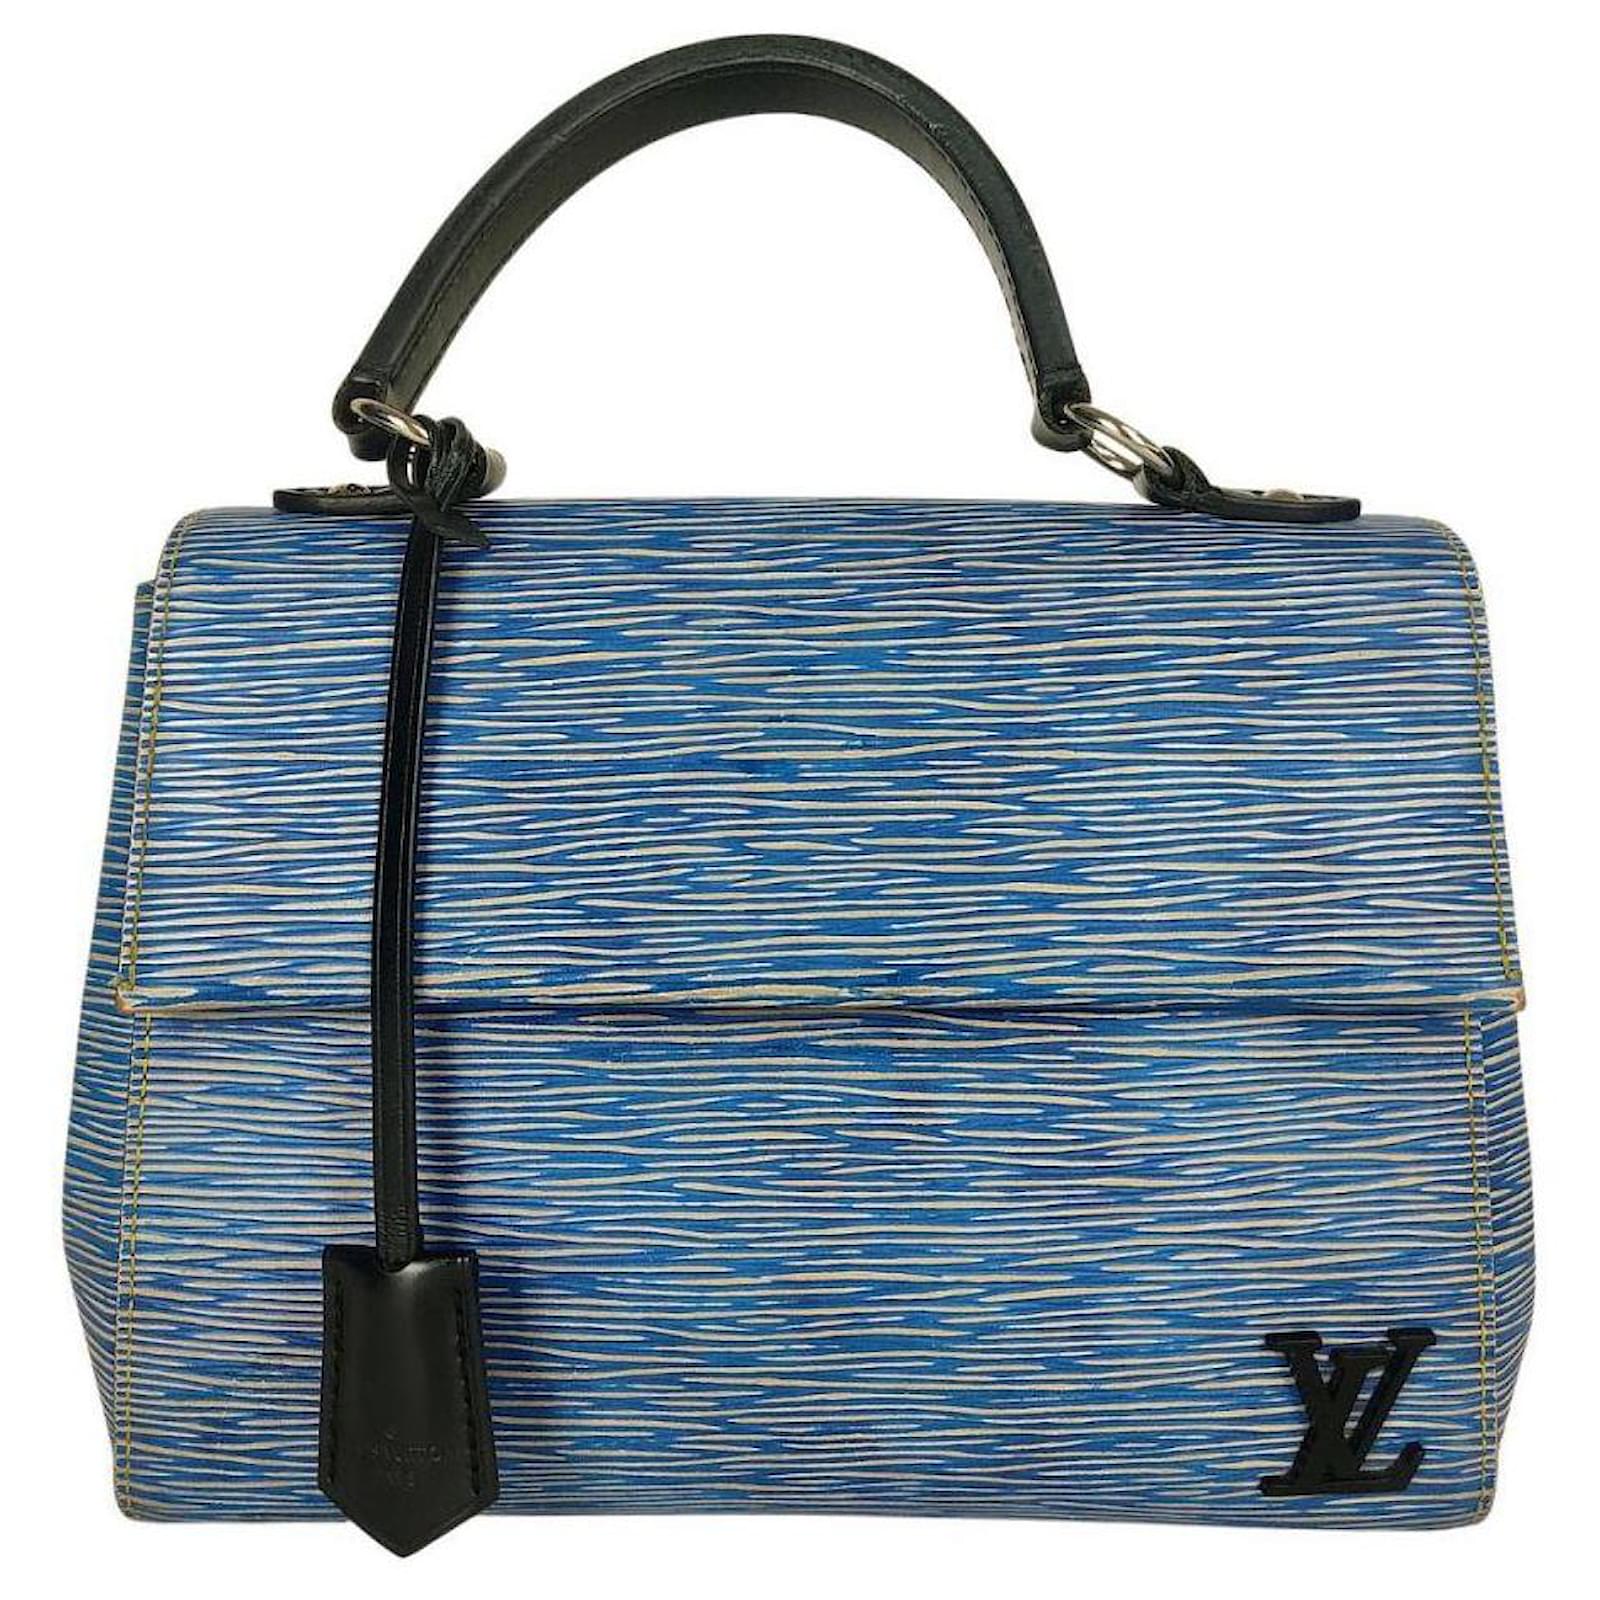 Cluny BB Epi Leather - Handbags